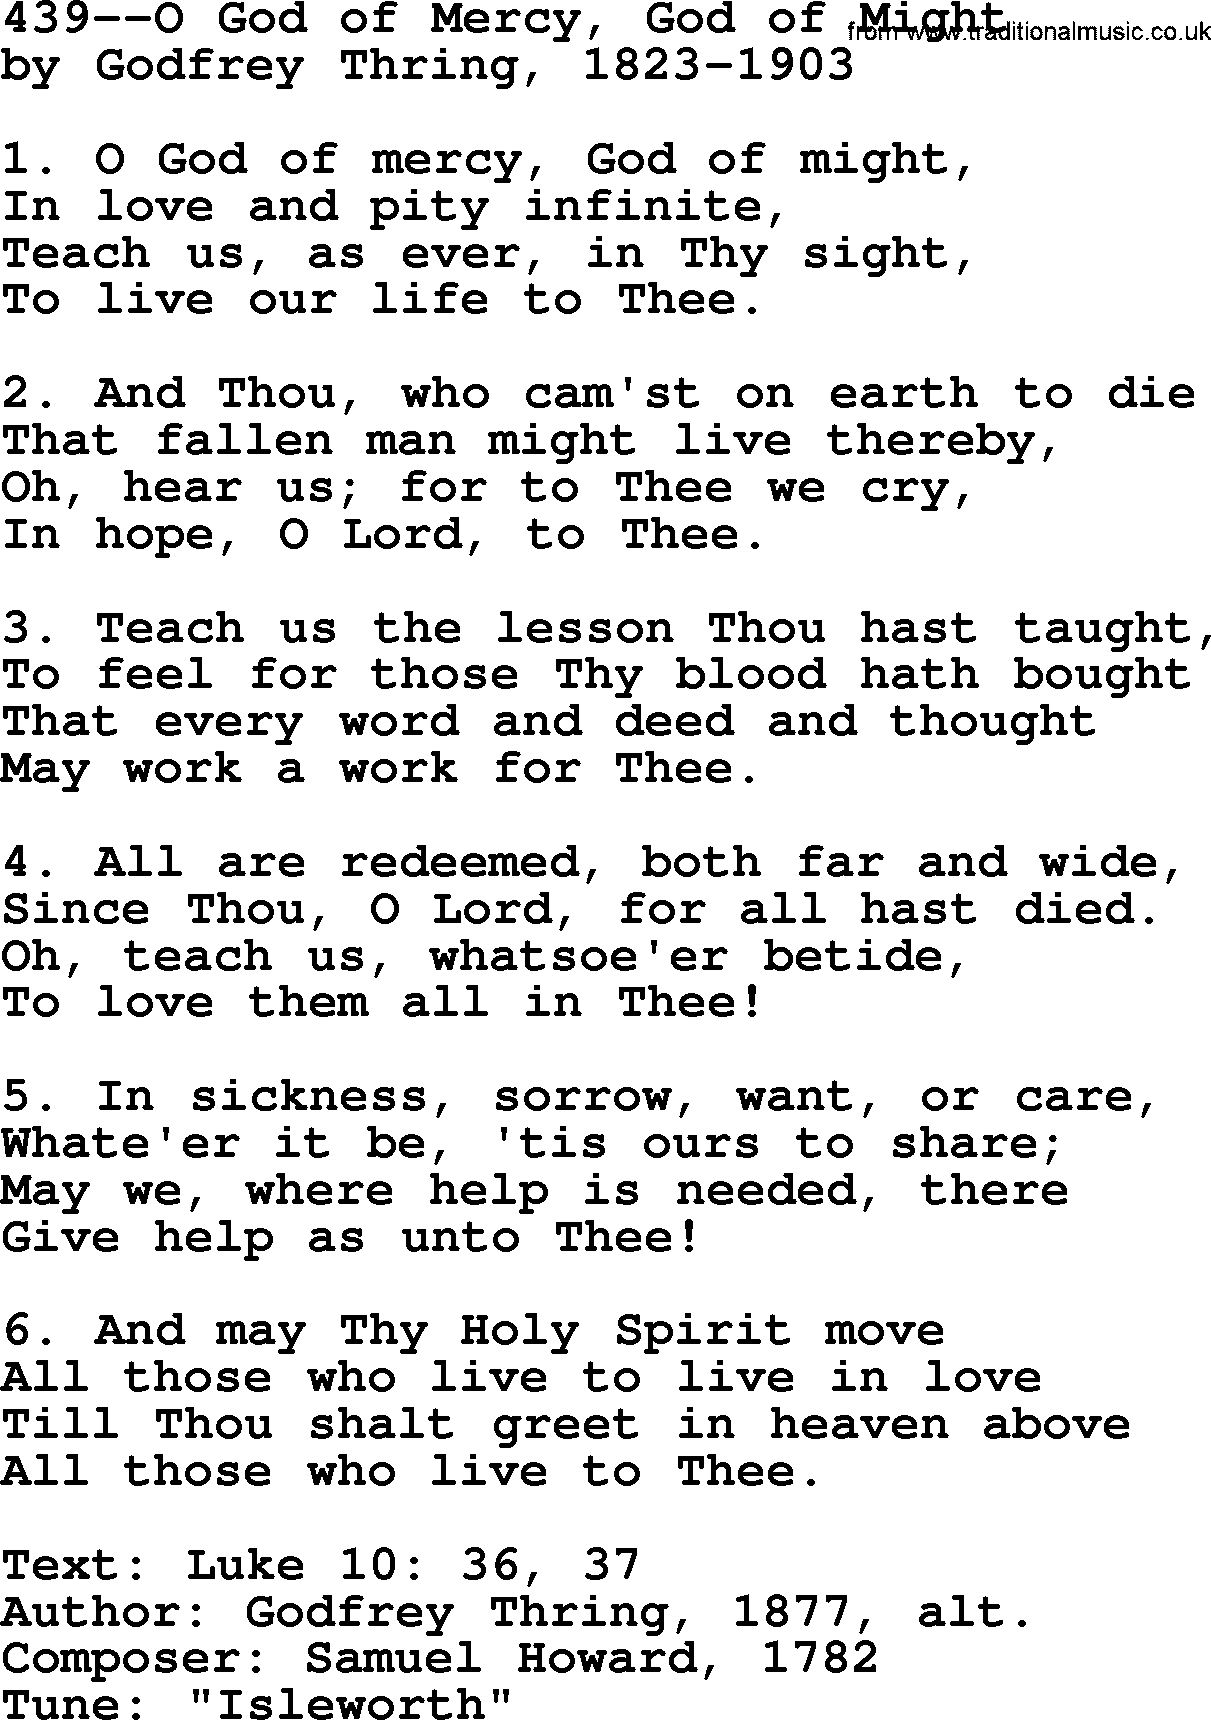 Lutheran Hymn: 439--O God of Mercy, God of Might.txt lyrics with PDF